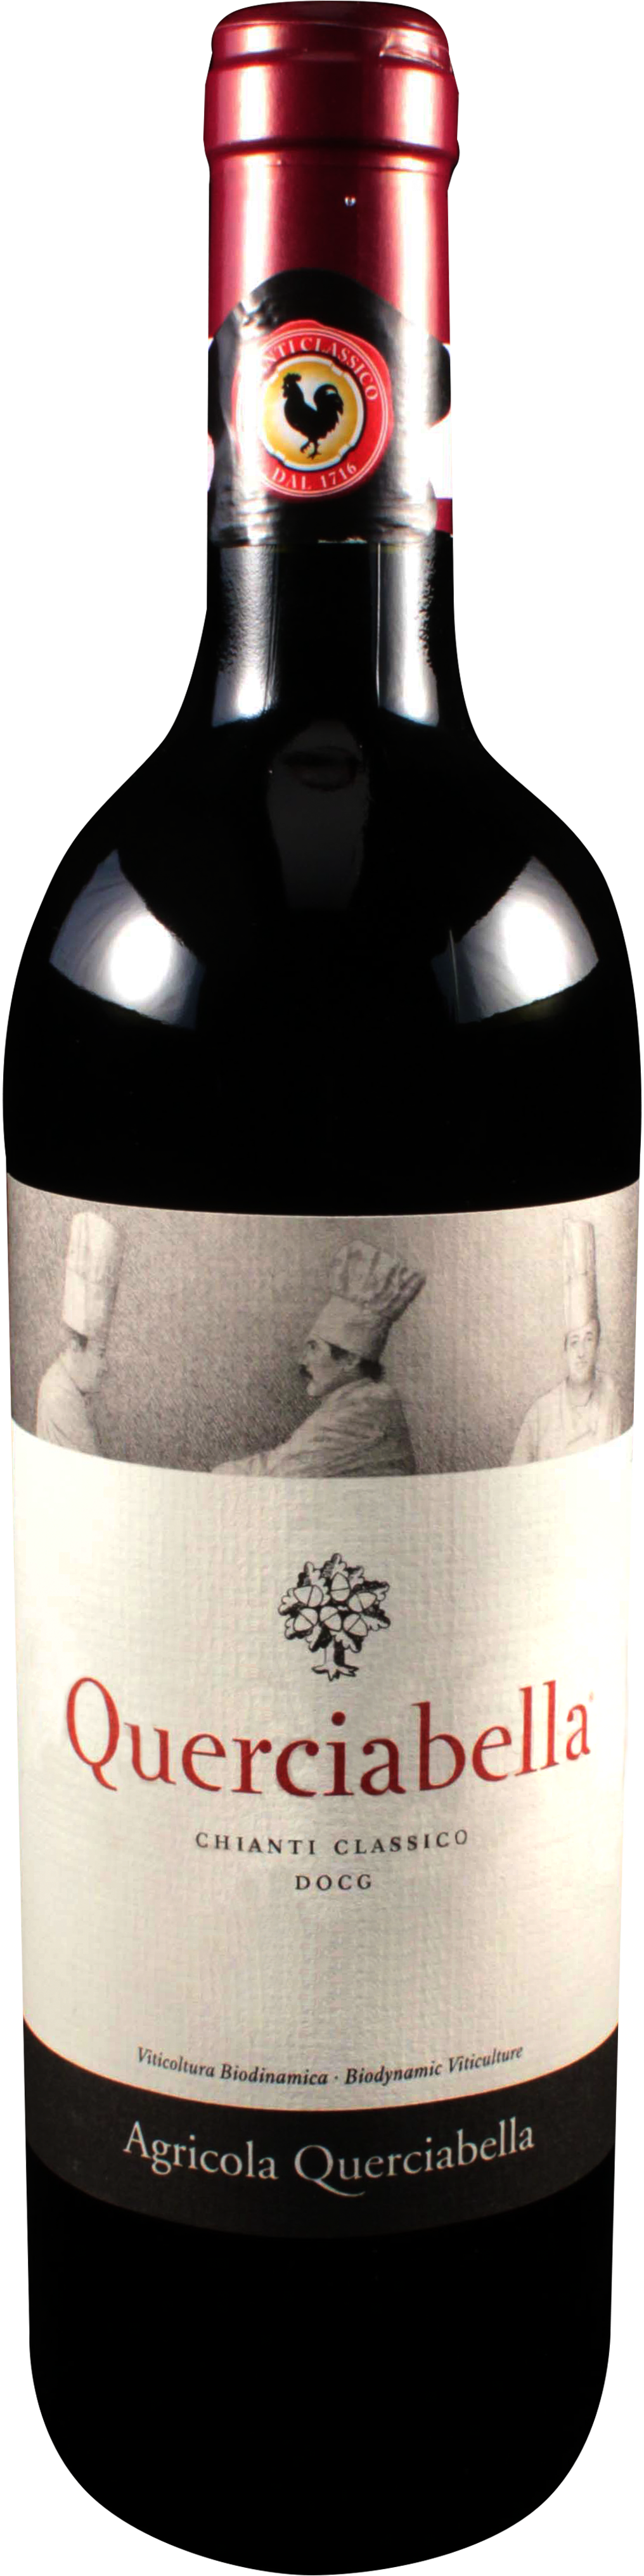 Bottle shot of 2011 Chianti Classico